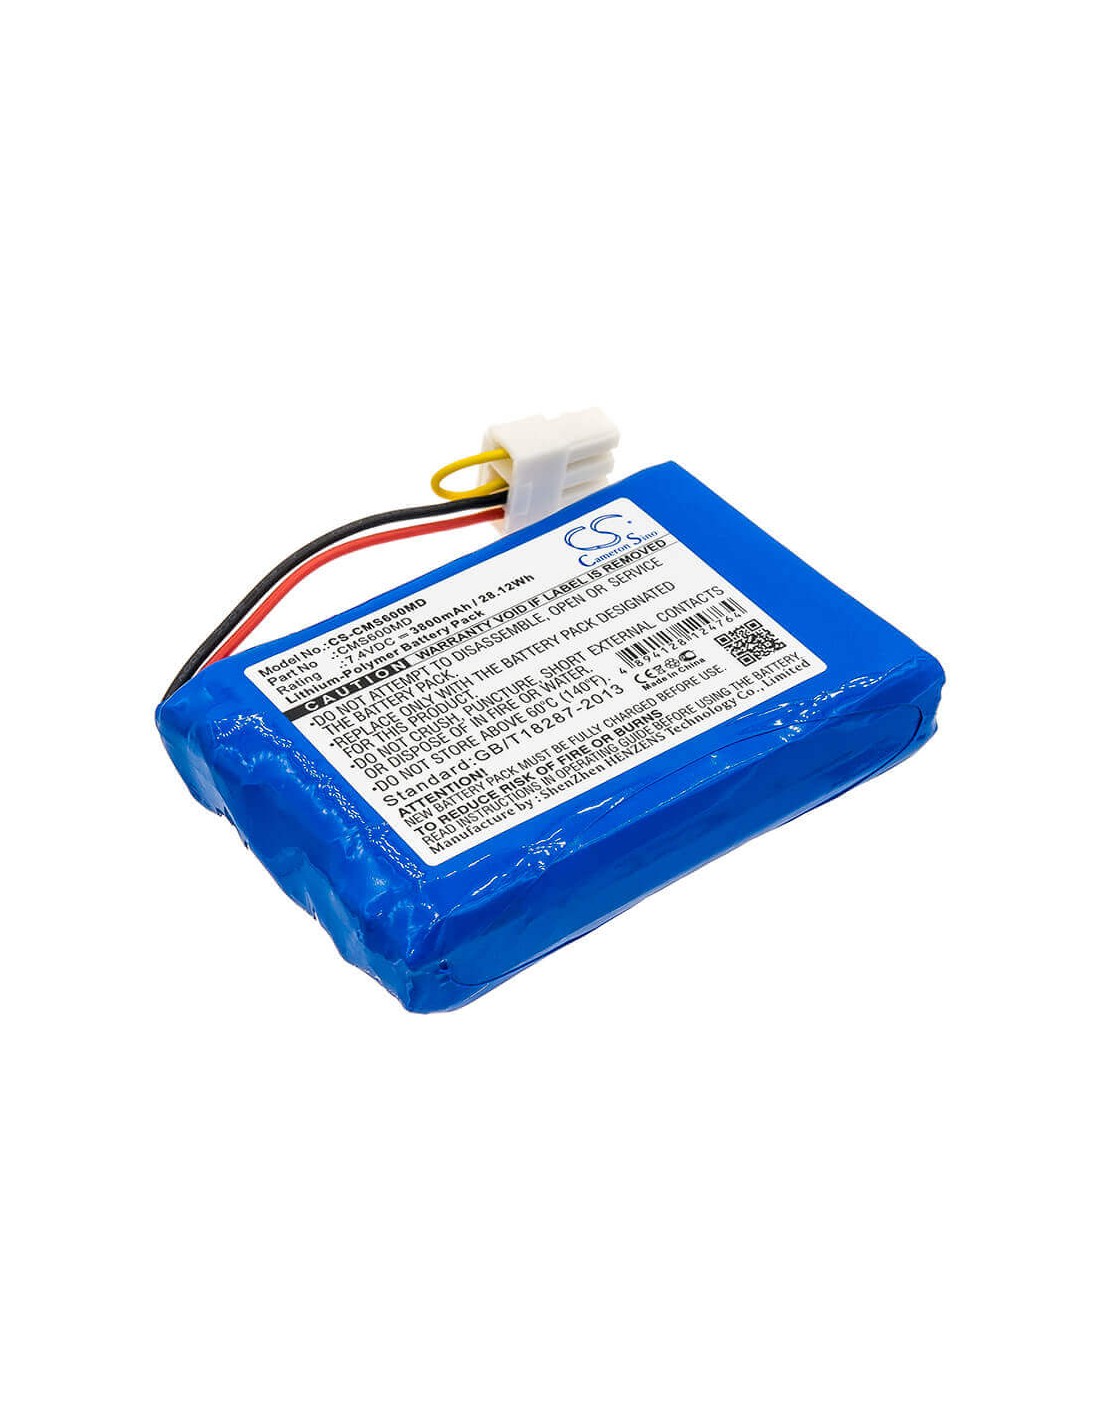 Battery for Contec Cms6000 7.4V, 3800mAh - 28.12Wh